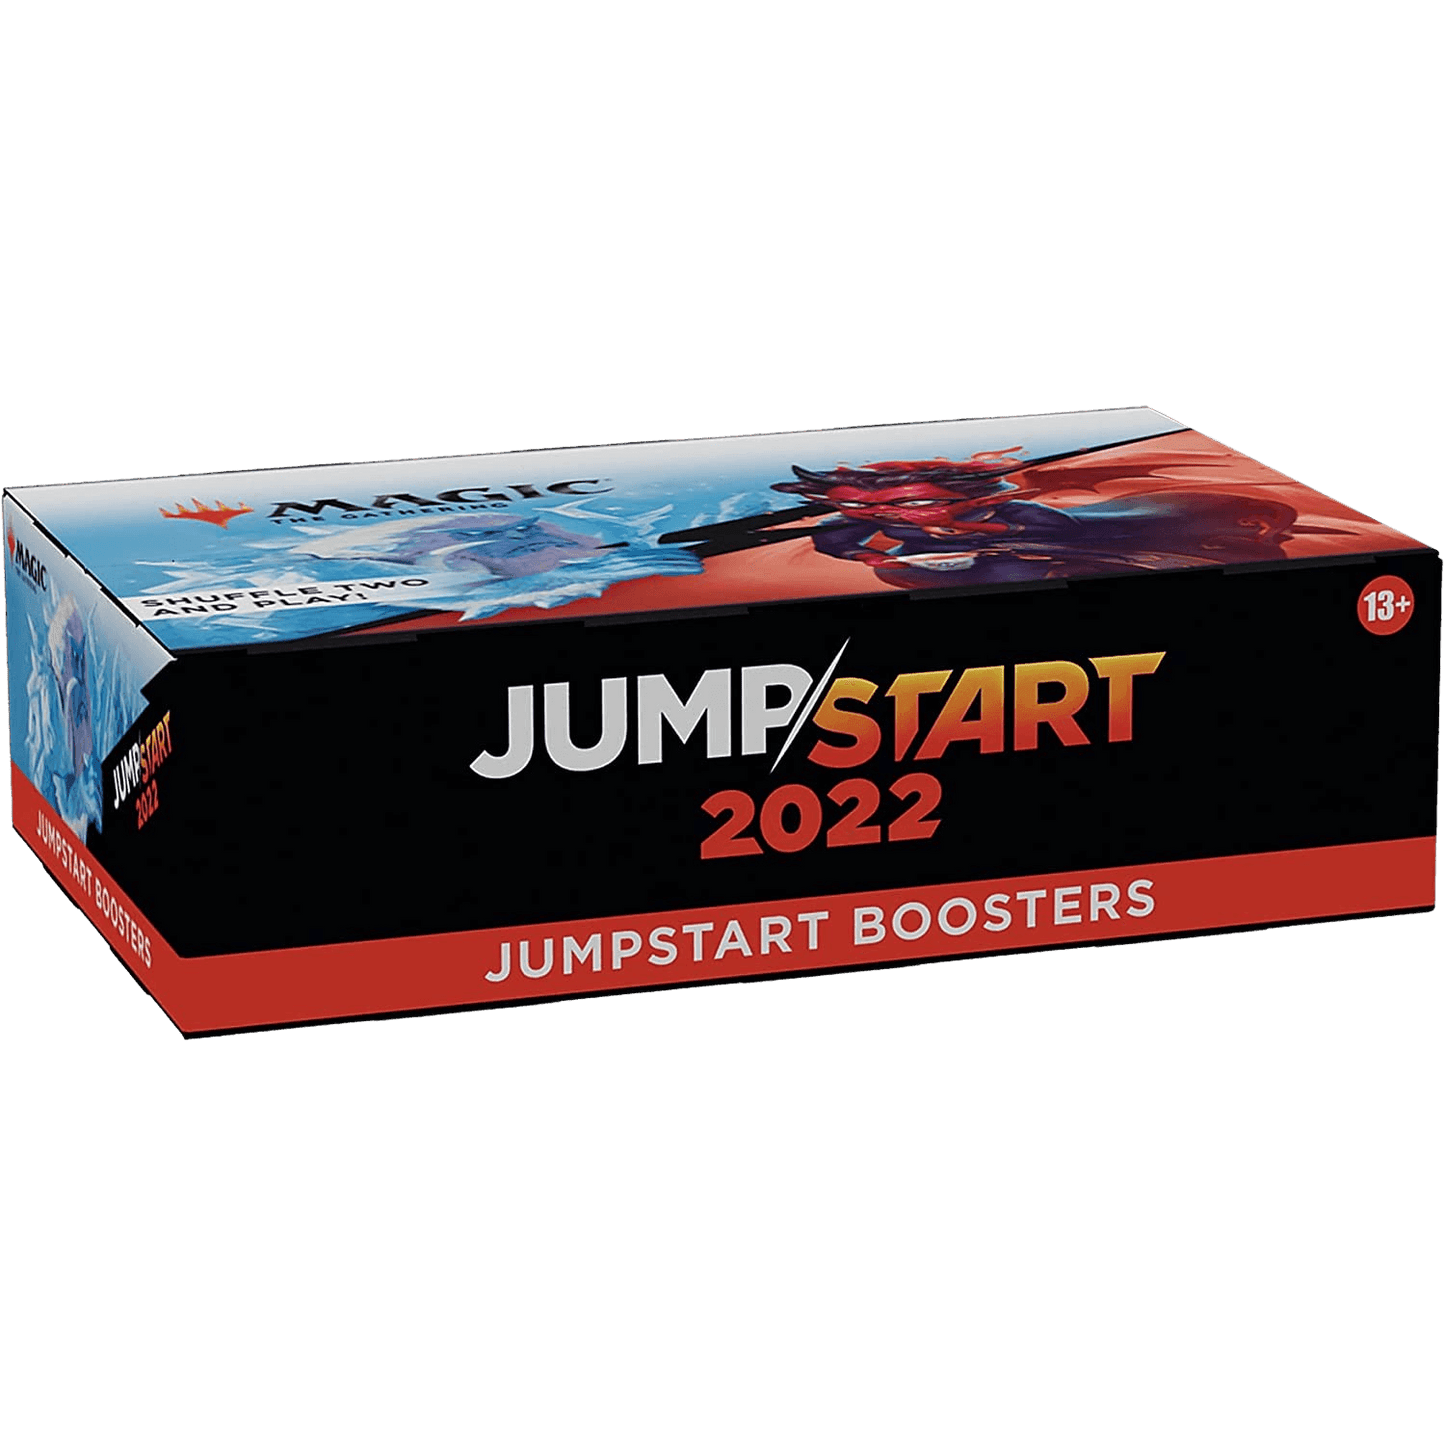 Magic: The Gathering - Jumpstart 2022 Booster Box (24 Packs)